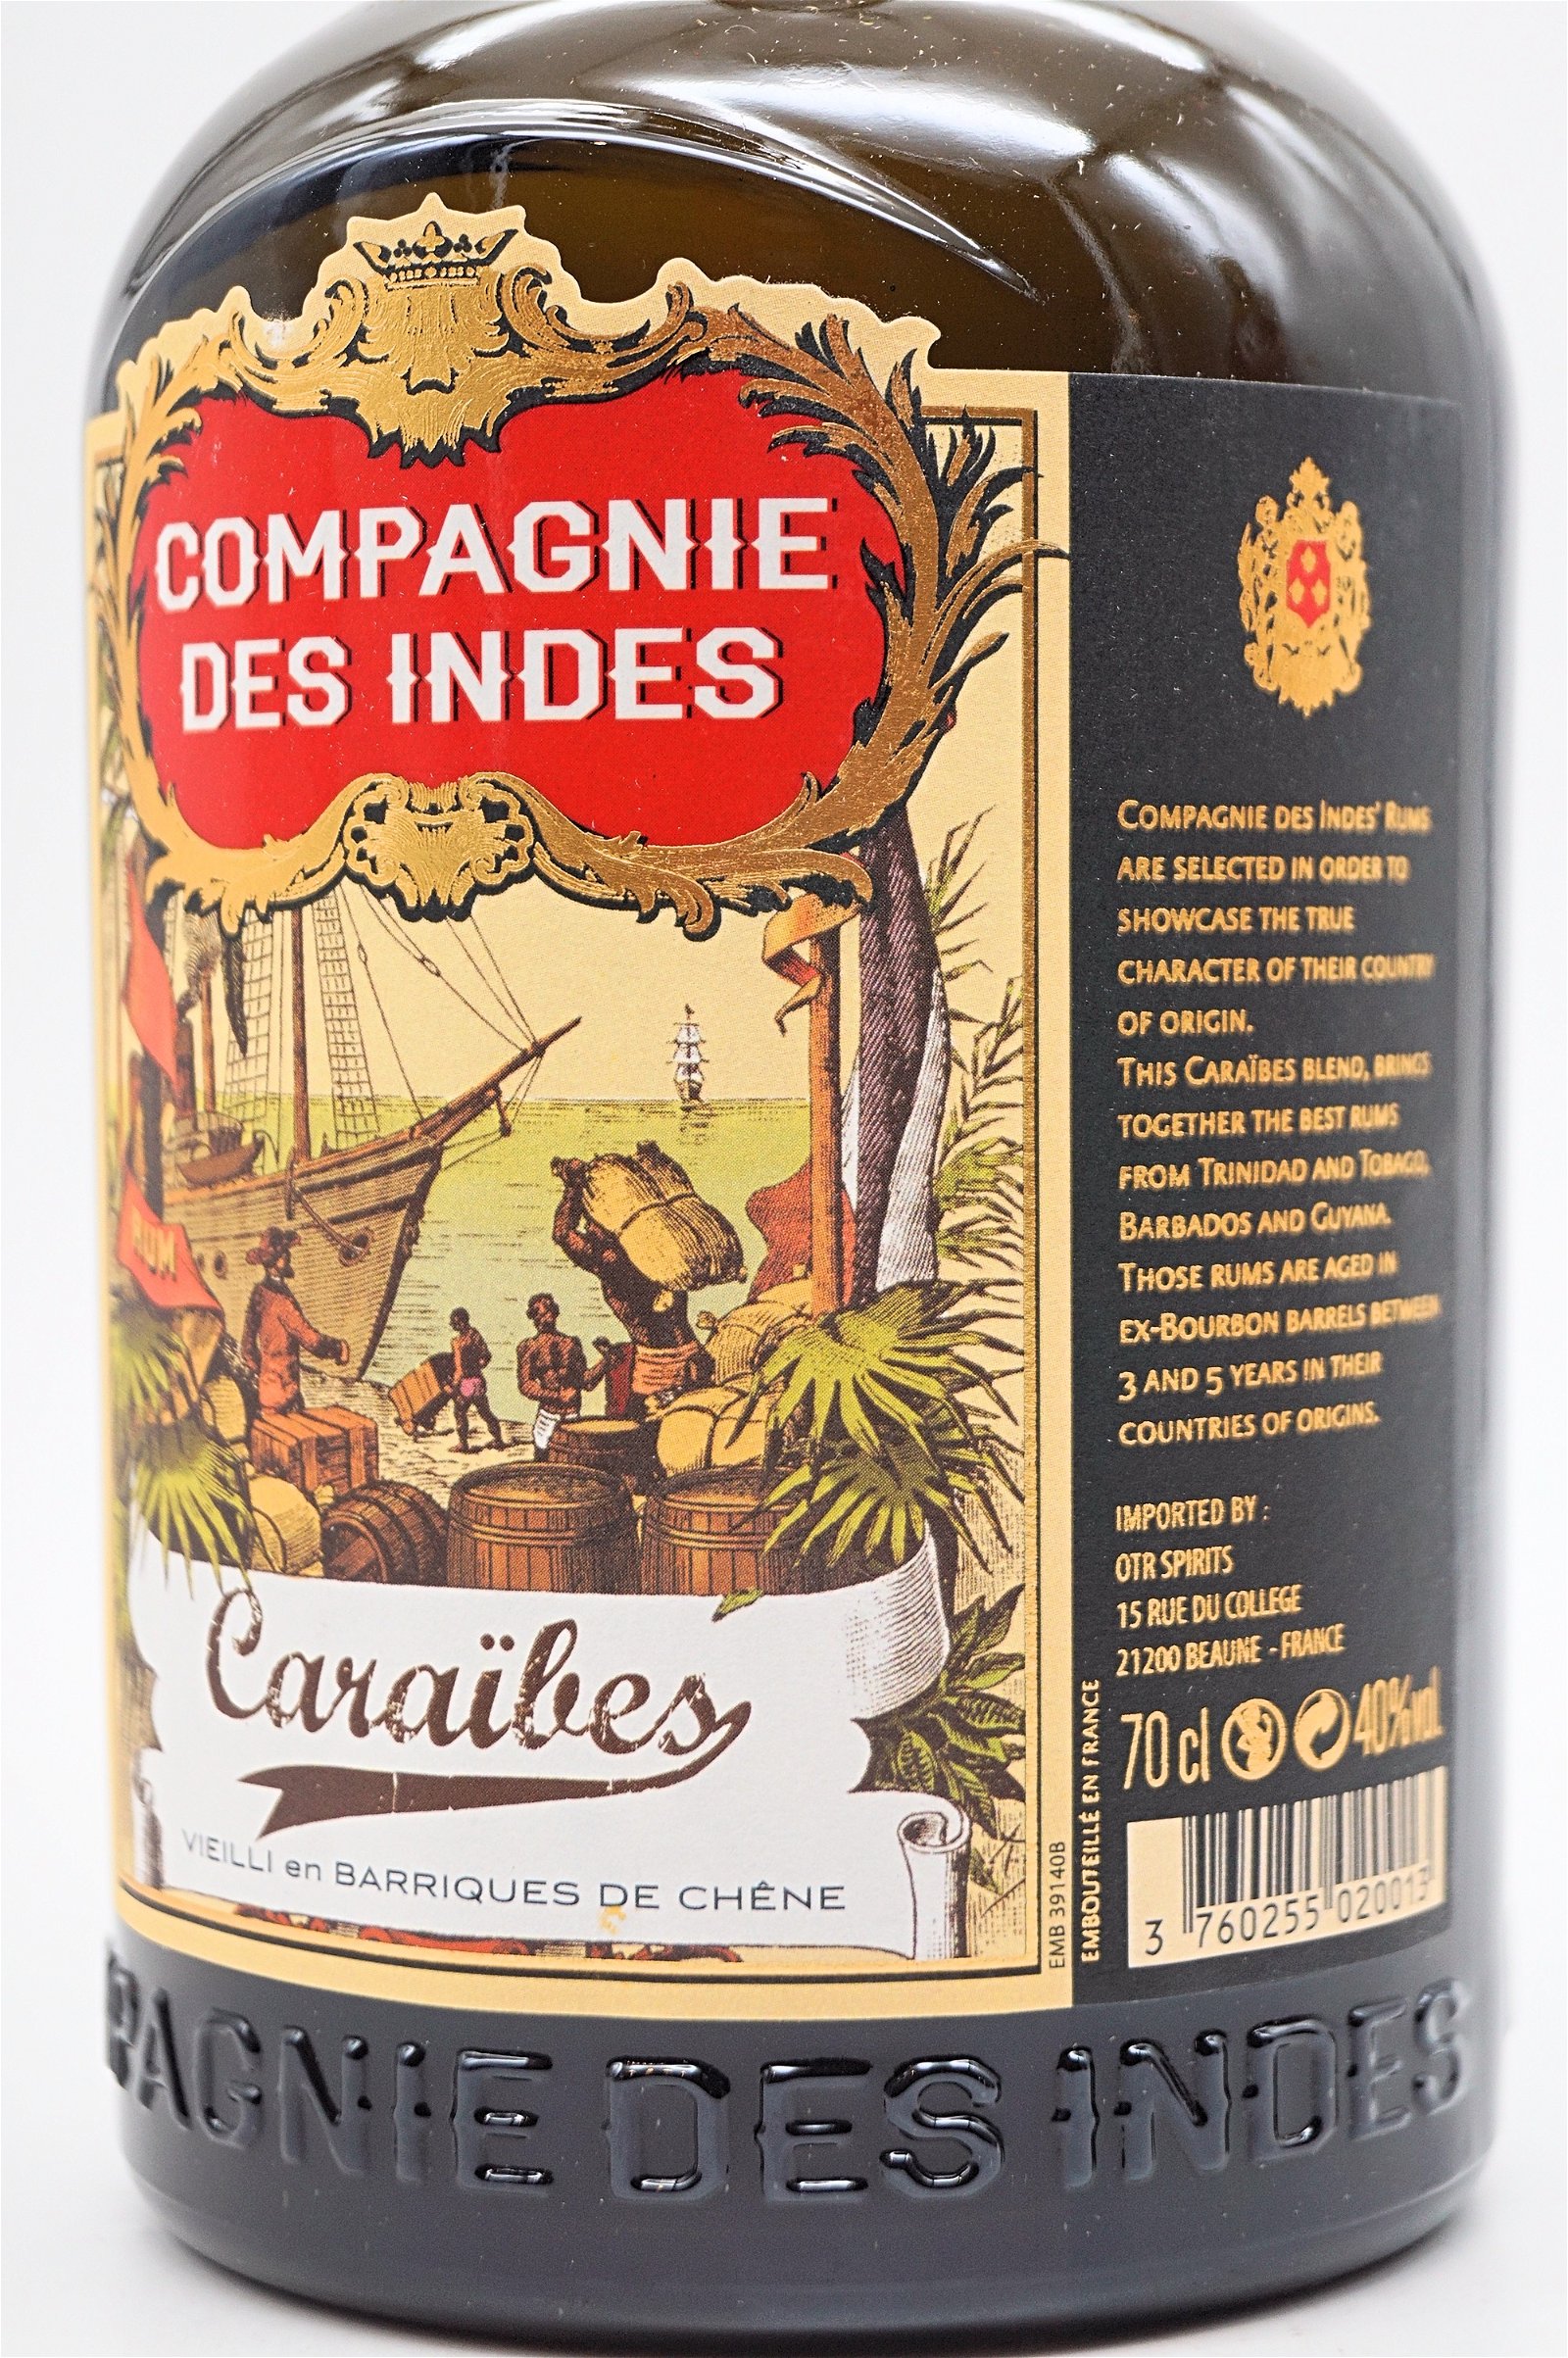 Compagnie des Indes Caraibes Rum